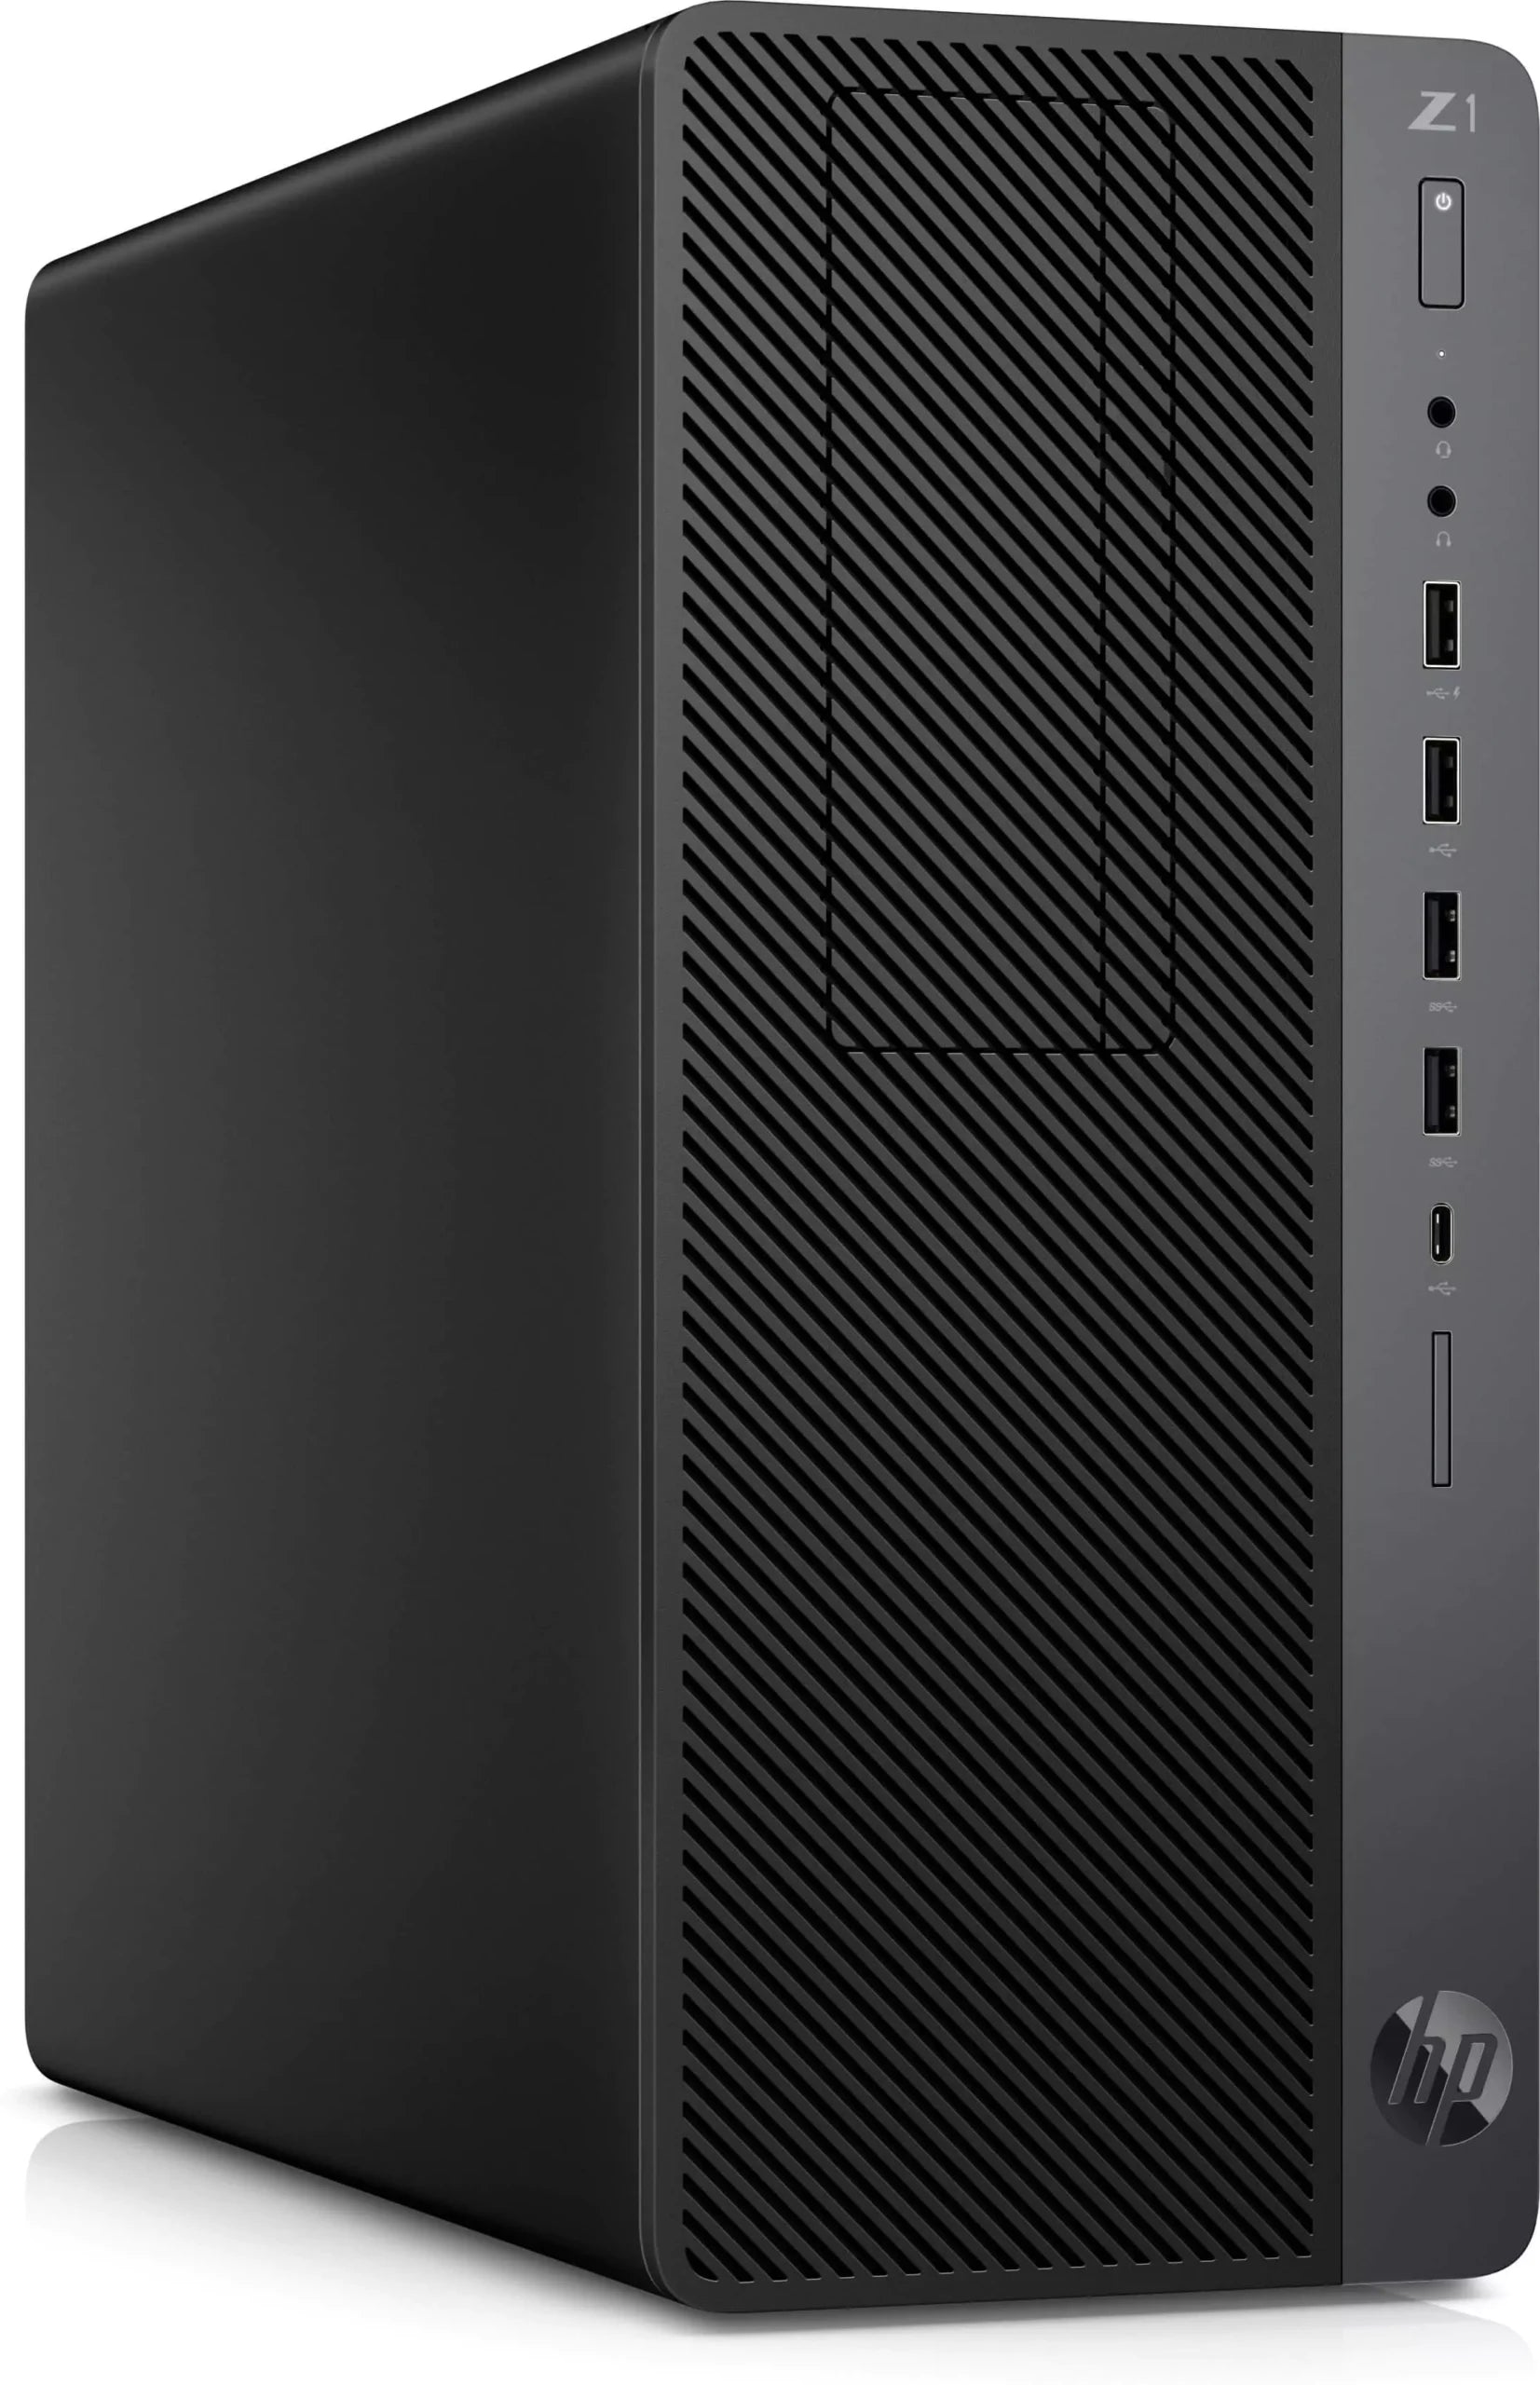 HP Z1 G5 - AMD RX550